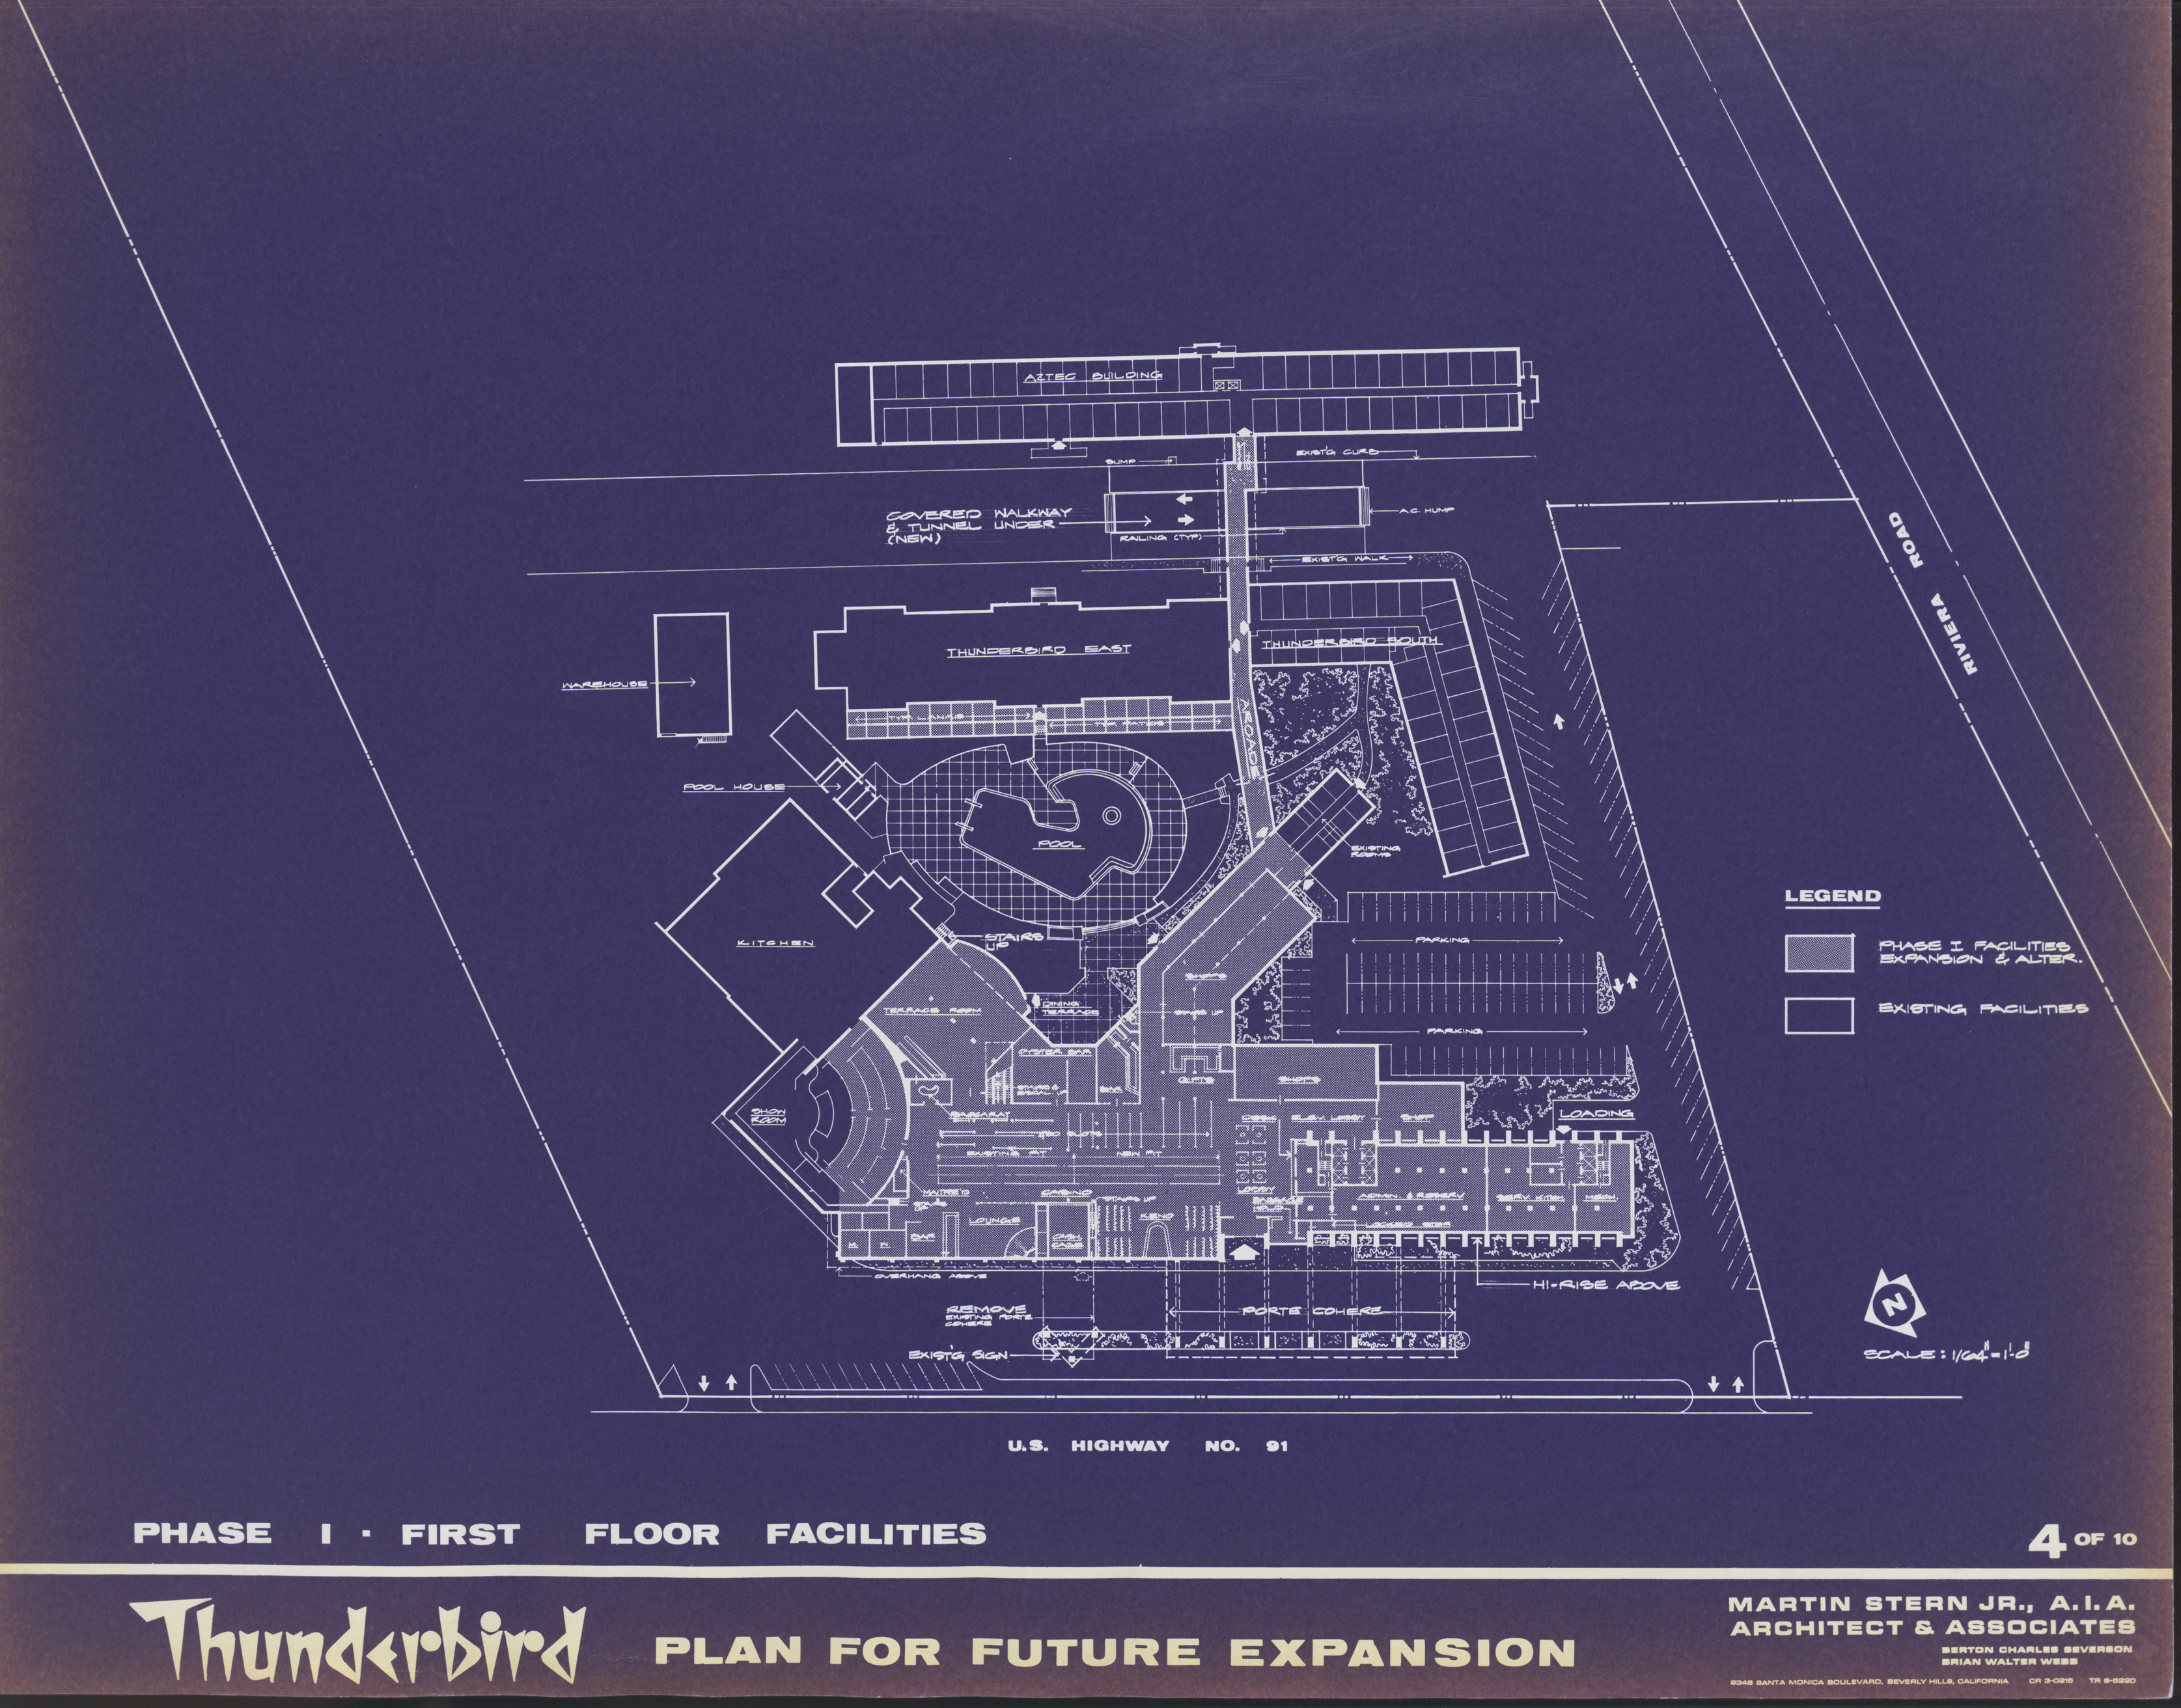 Thunderbird Plan for Future Expansion Proposal, image 4